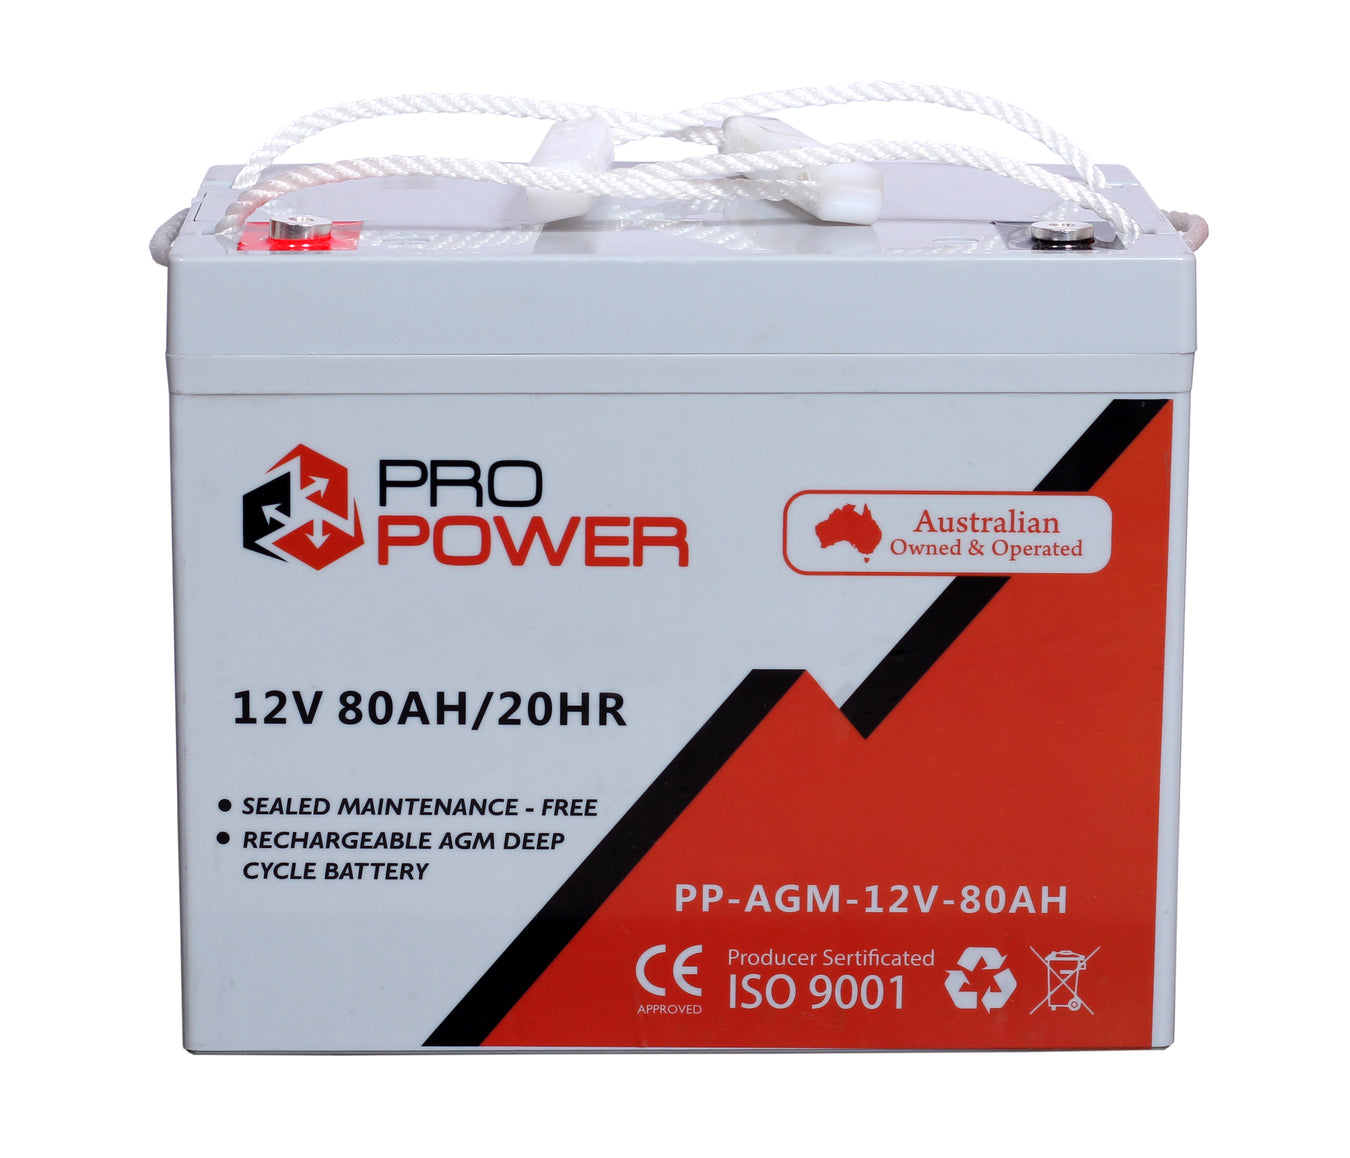 Pro power - battery - agm